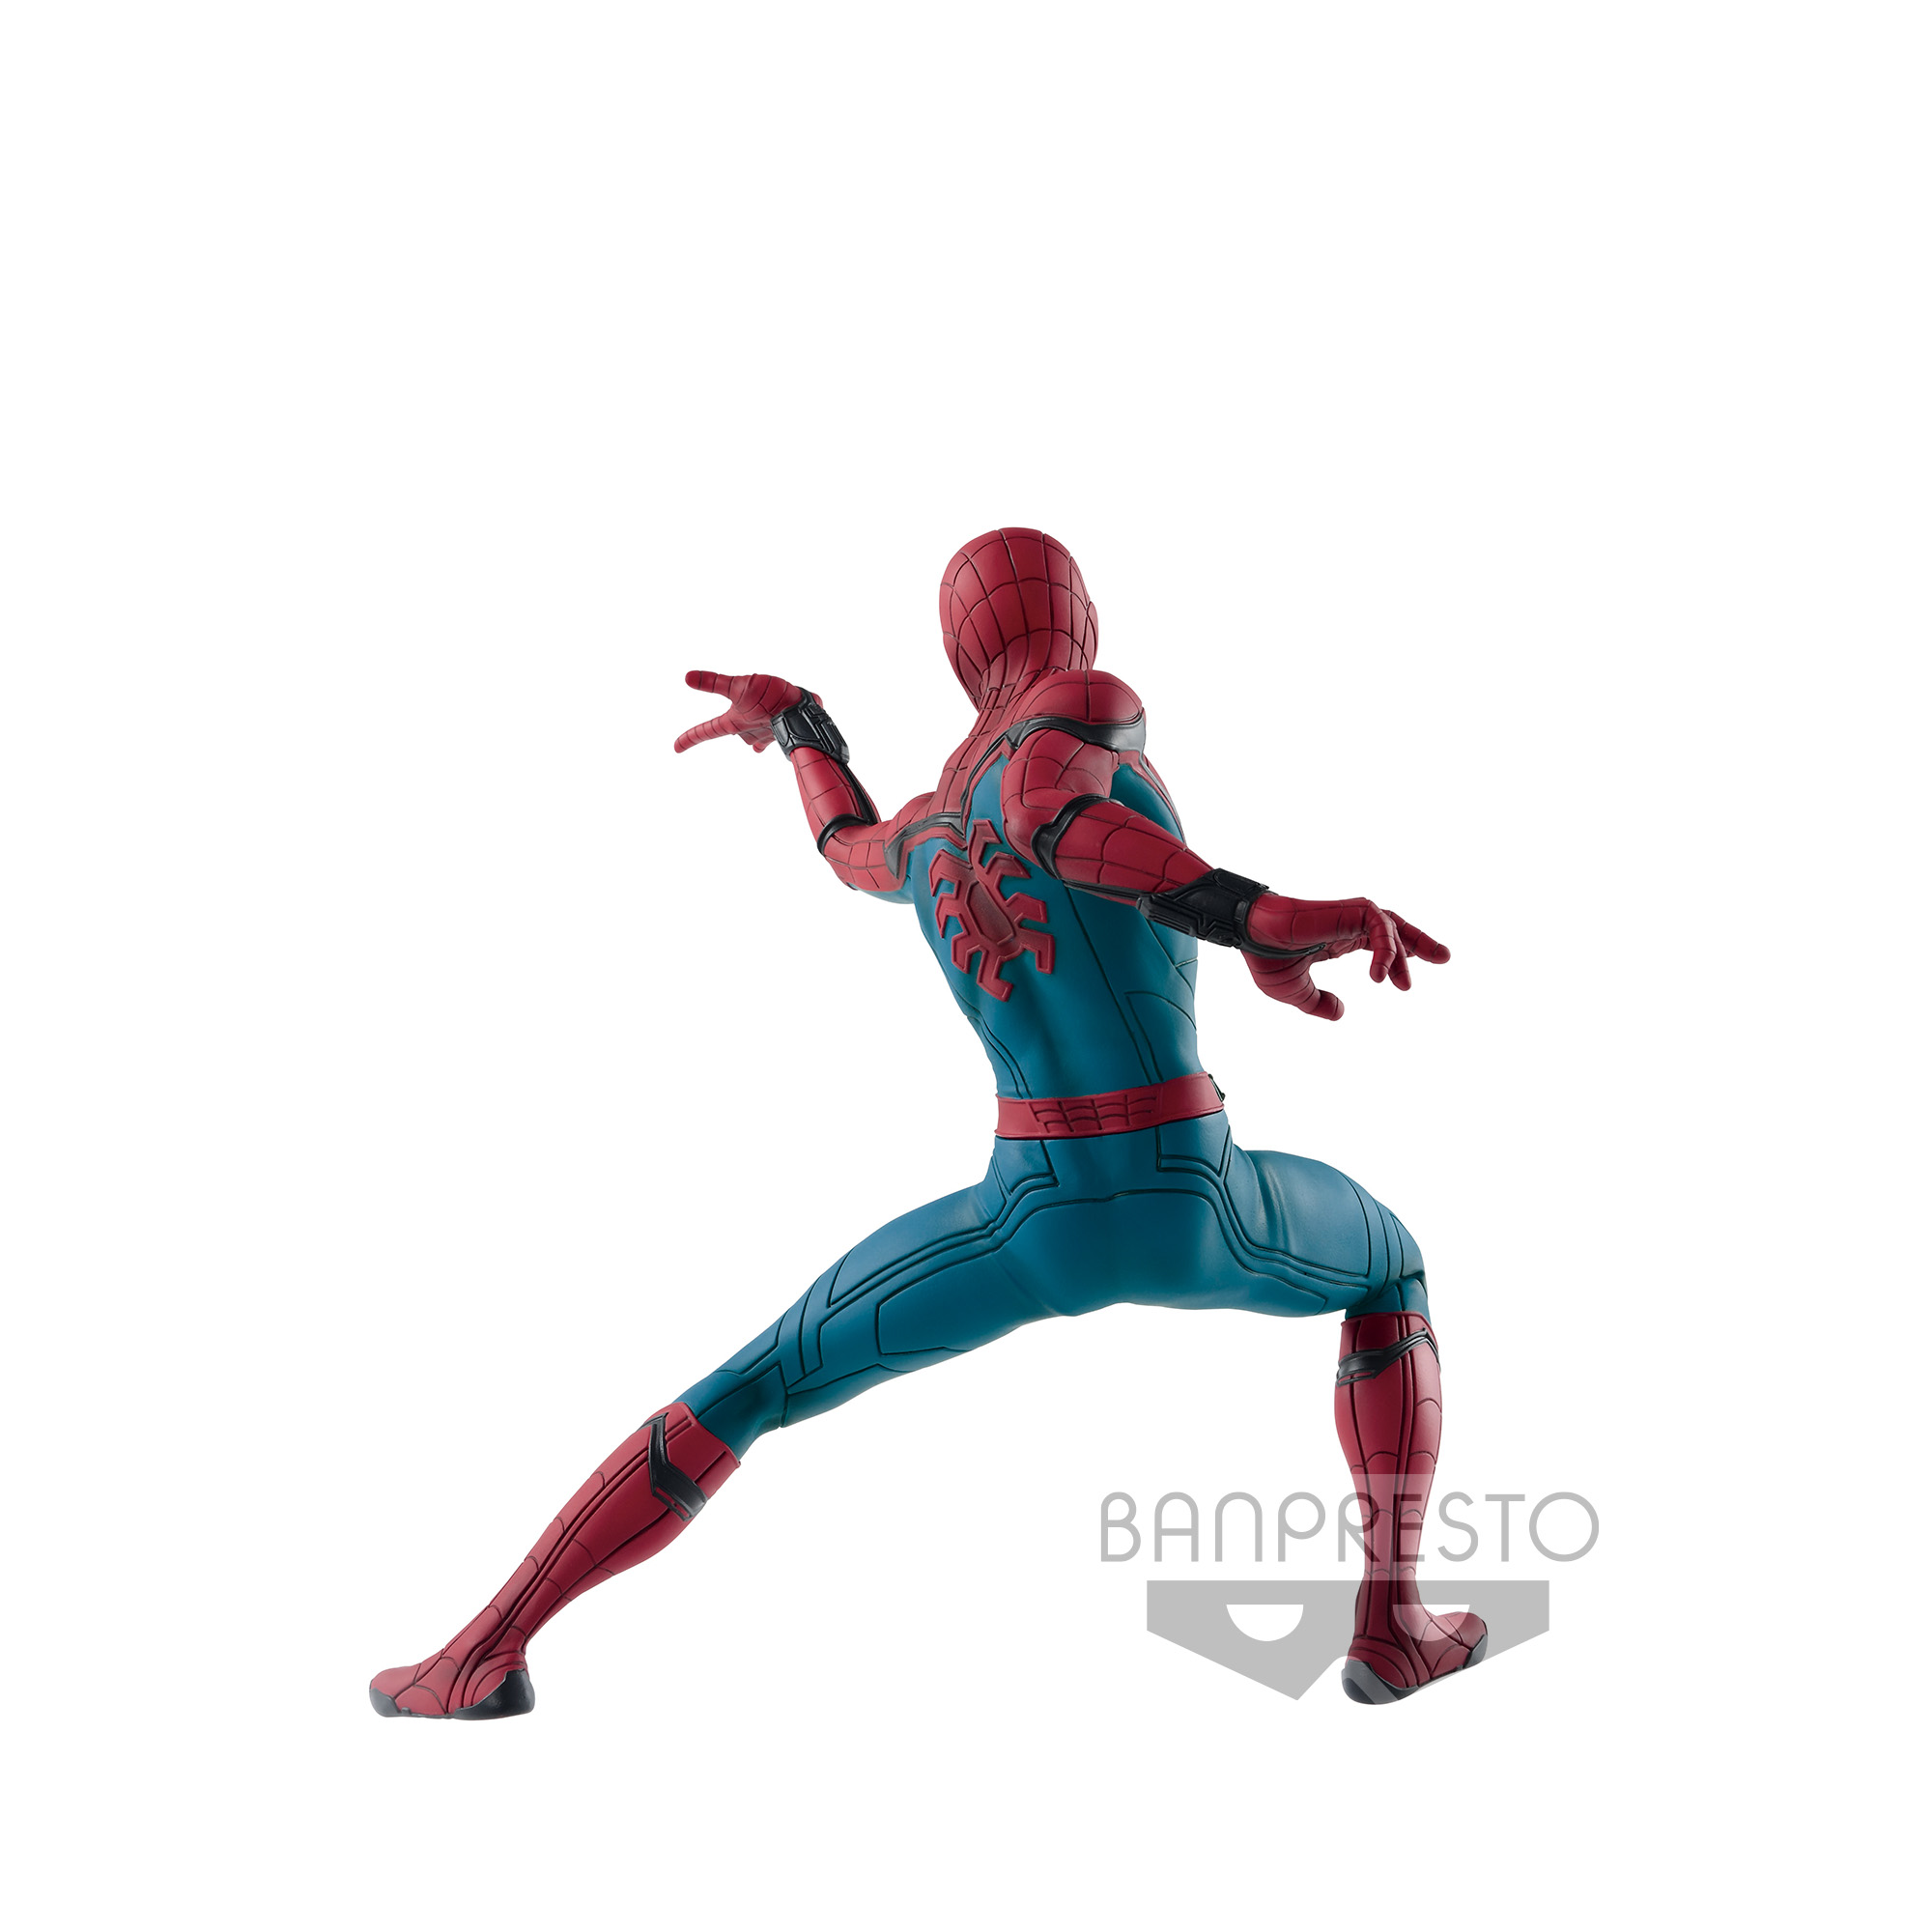 Banpresto Asia Limited Marvel Spider-Man Homecoming Figure 